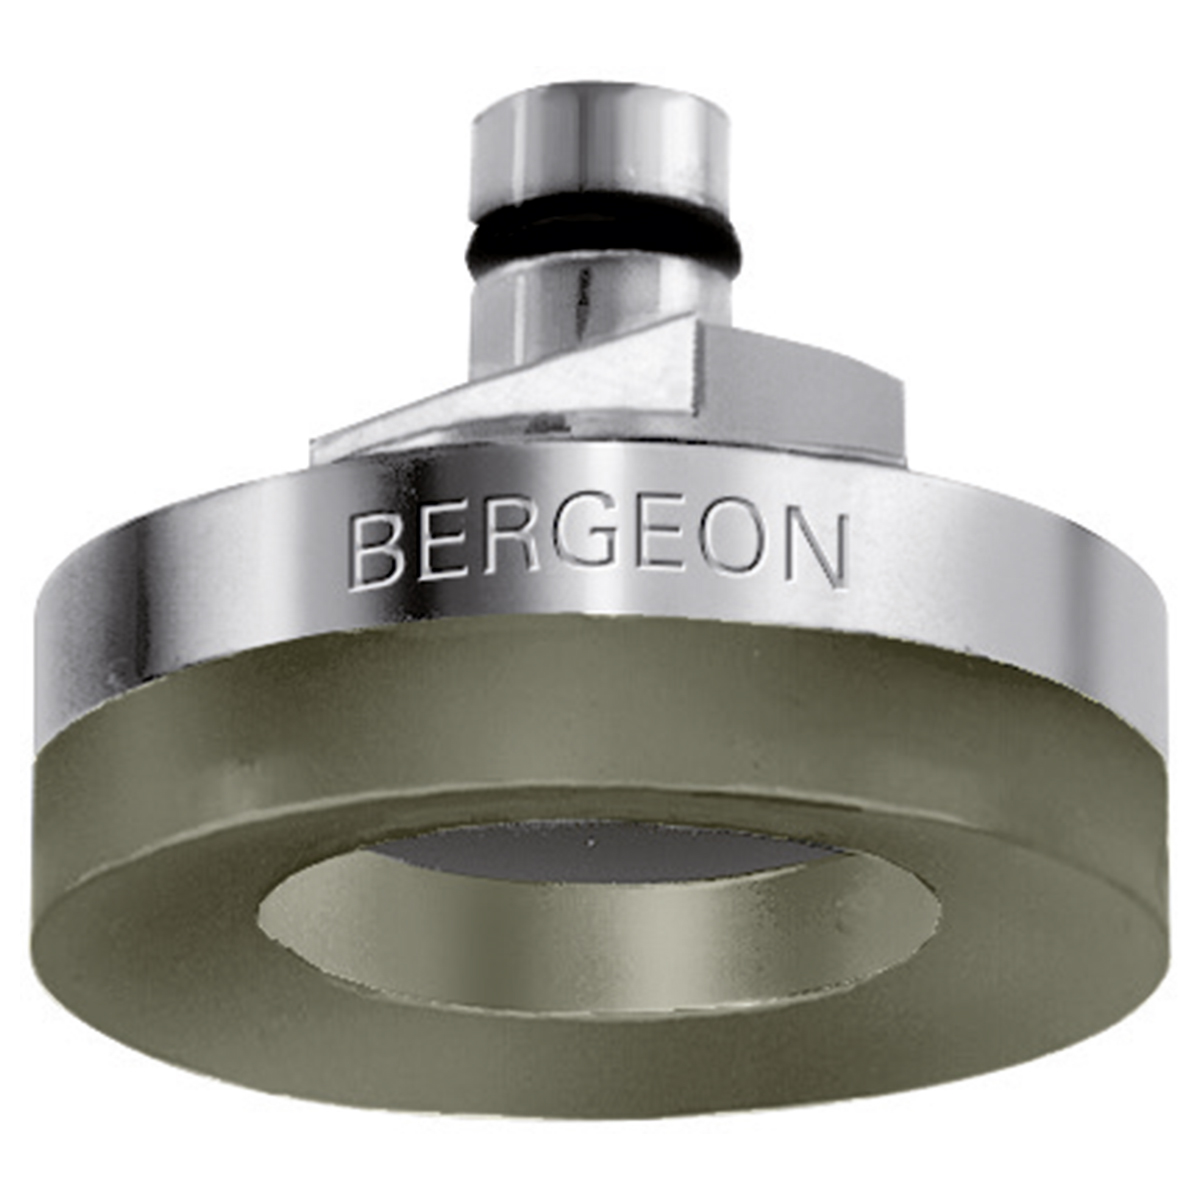 Bergeon 5700-62-40 upper suction head, adiprene, Ø 40 mm